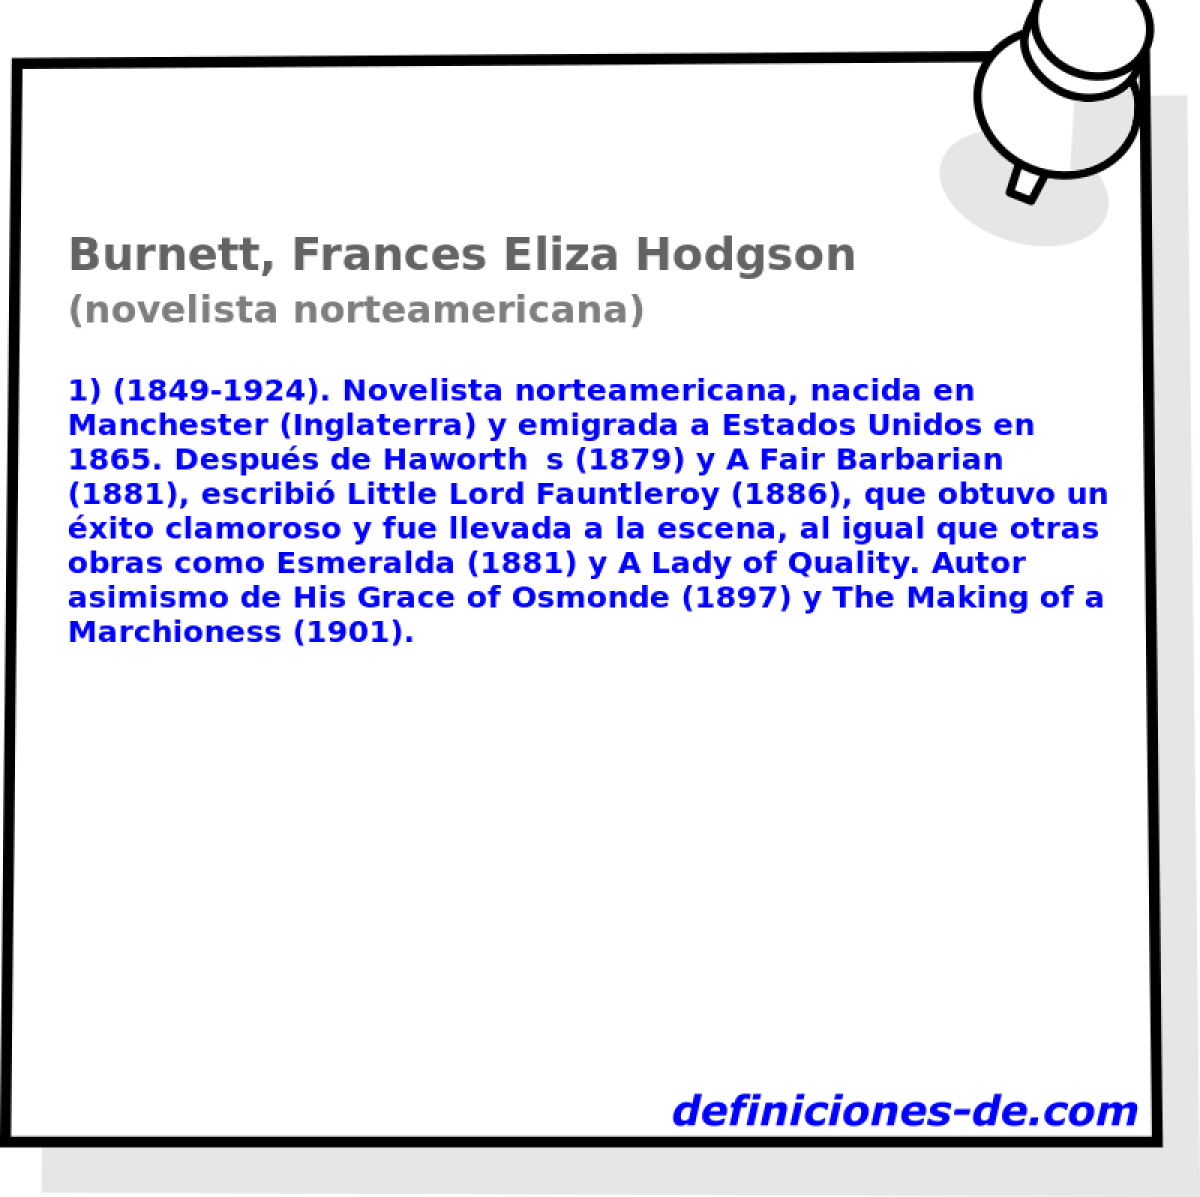 Burnett, Frances Eliza Hodgson (novelista norteamericana)